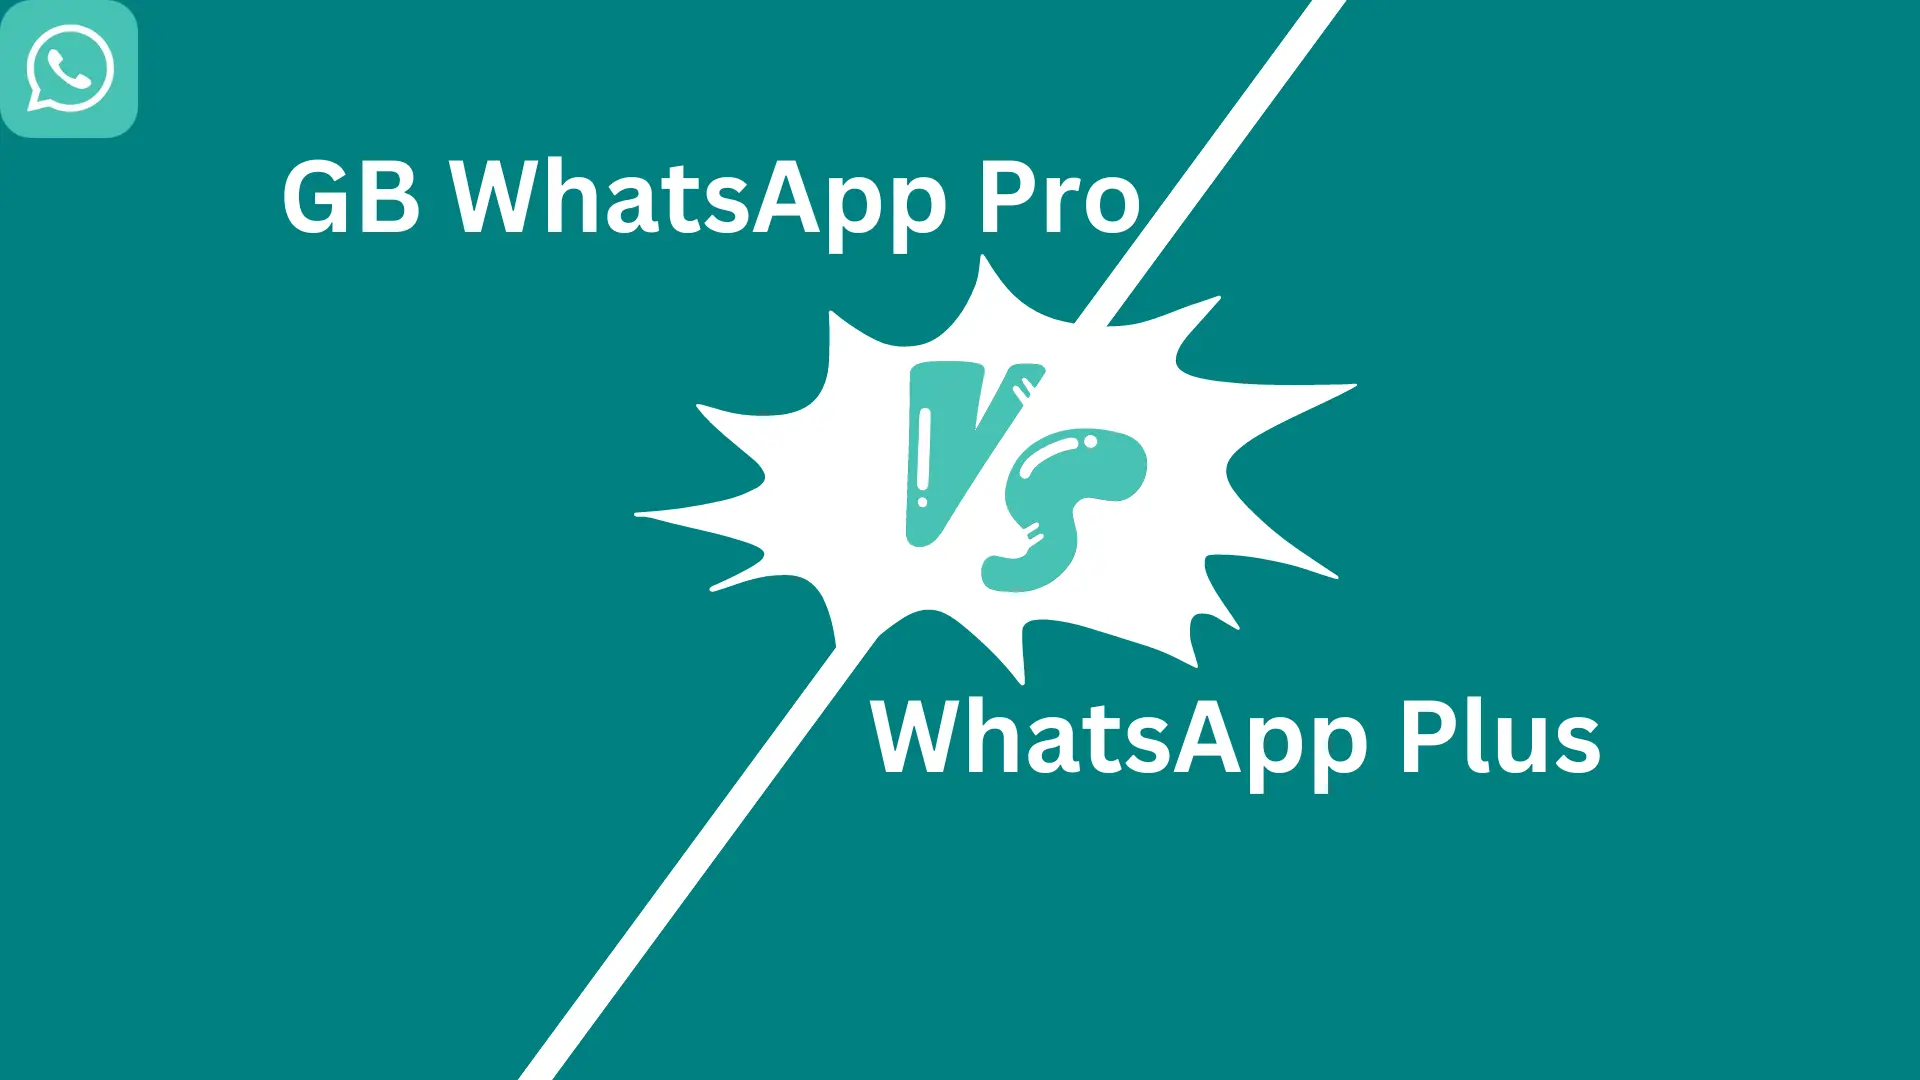 gb-whatsapp-pro-vs-whatsapp-plus-featured-image